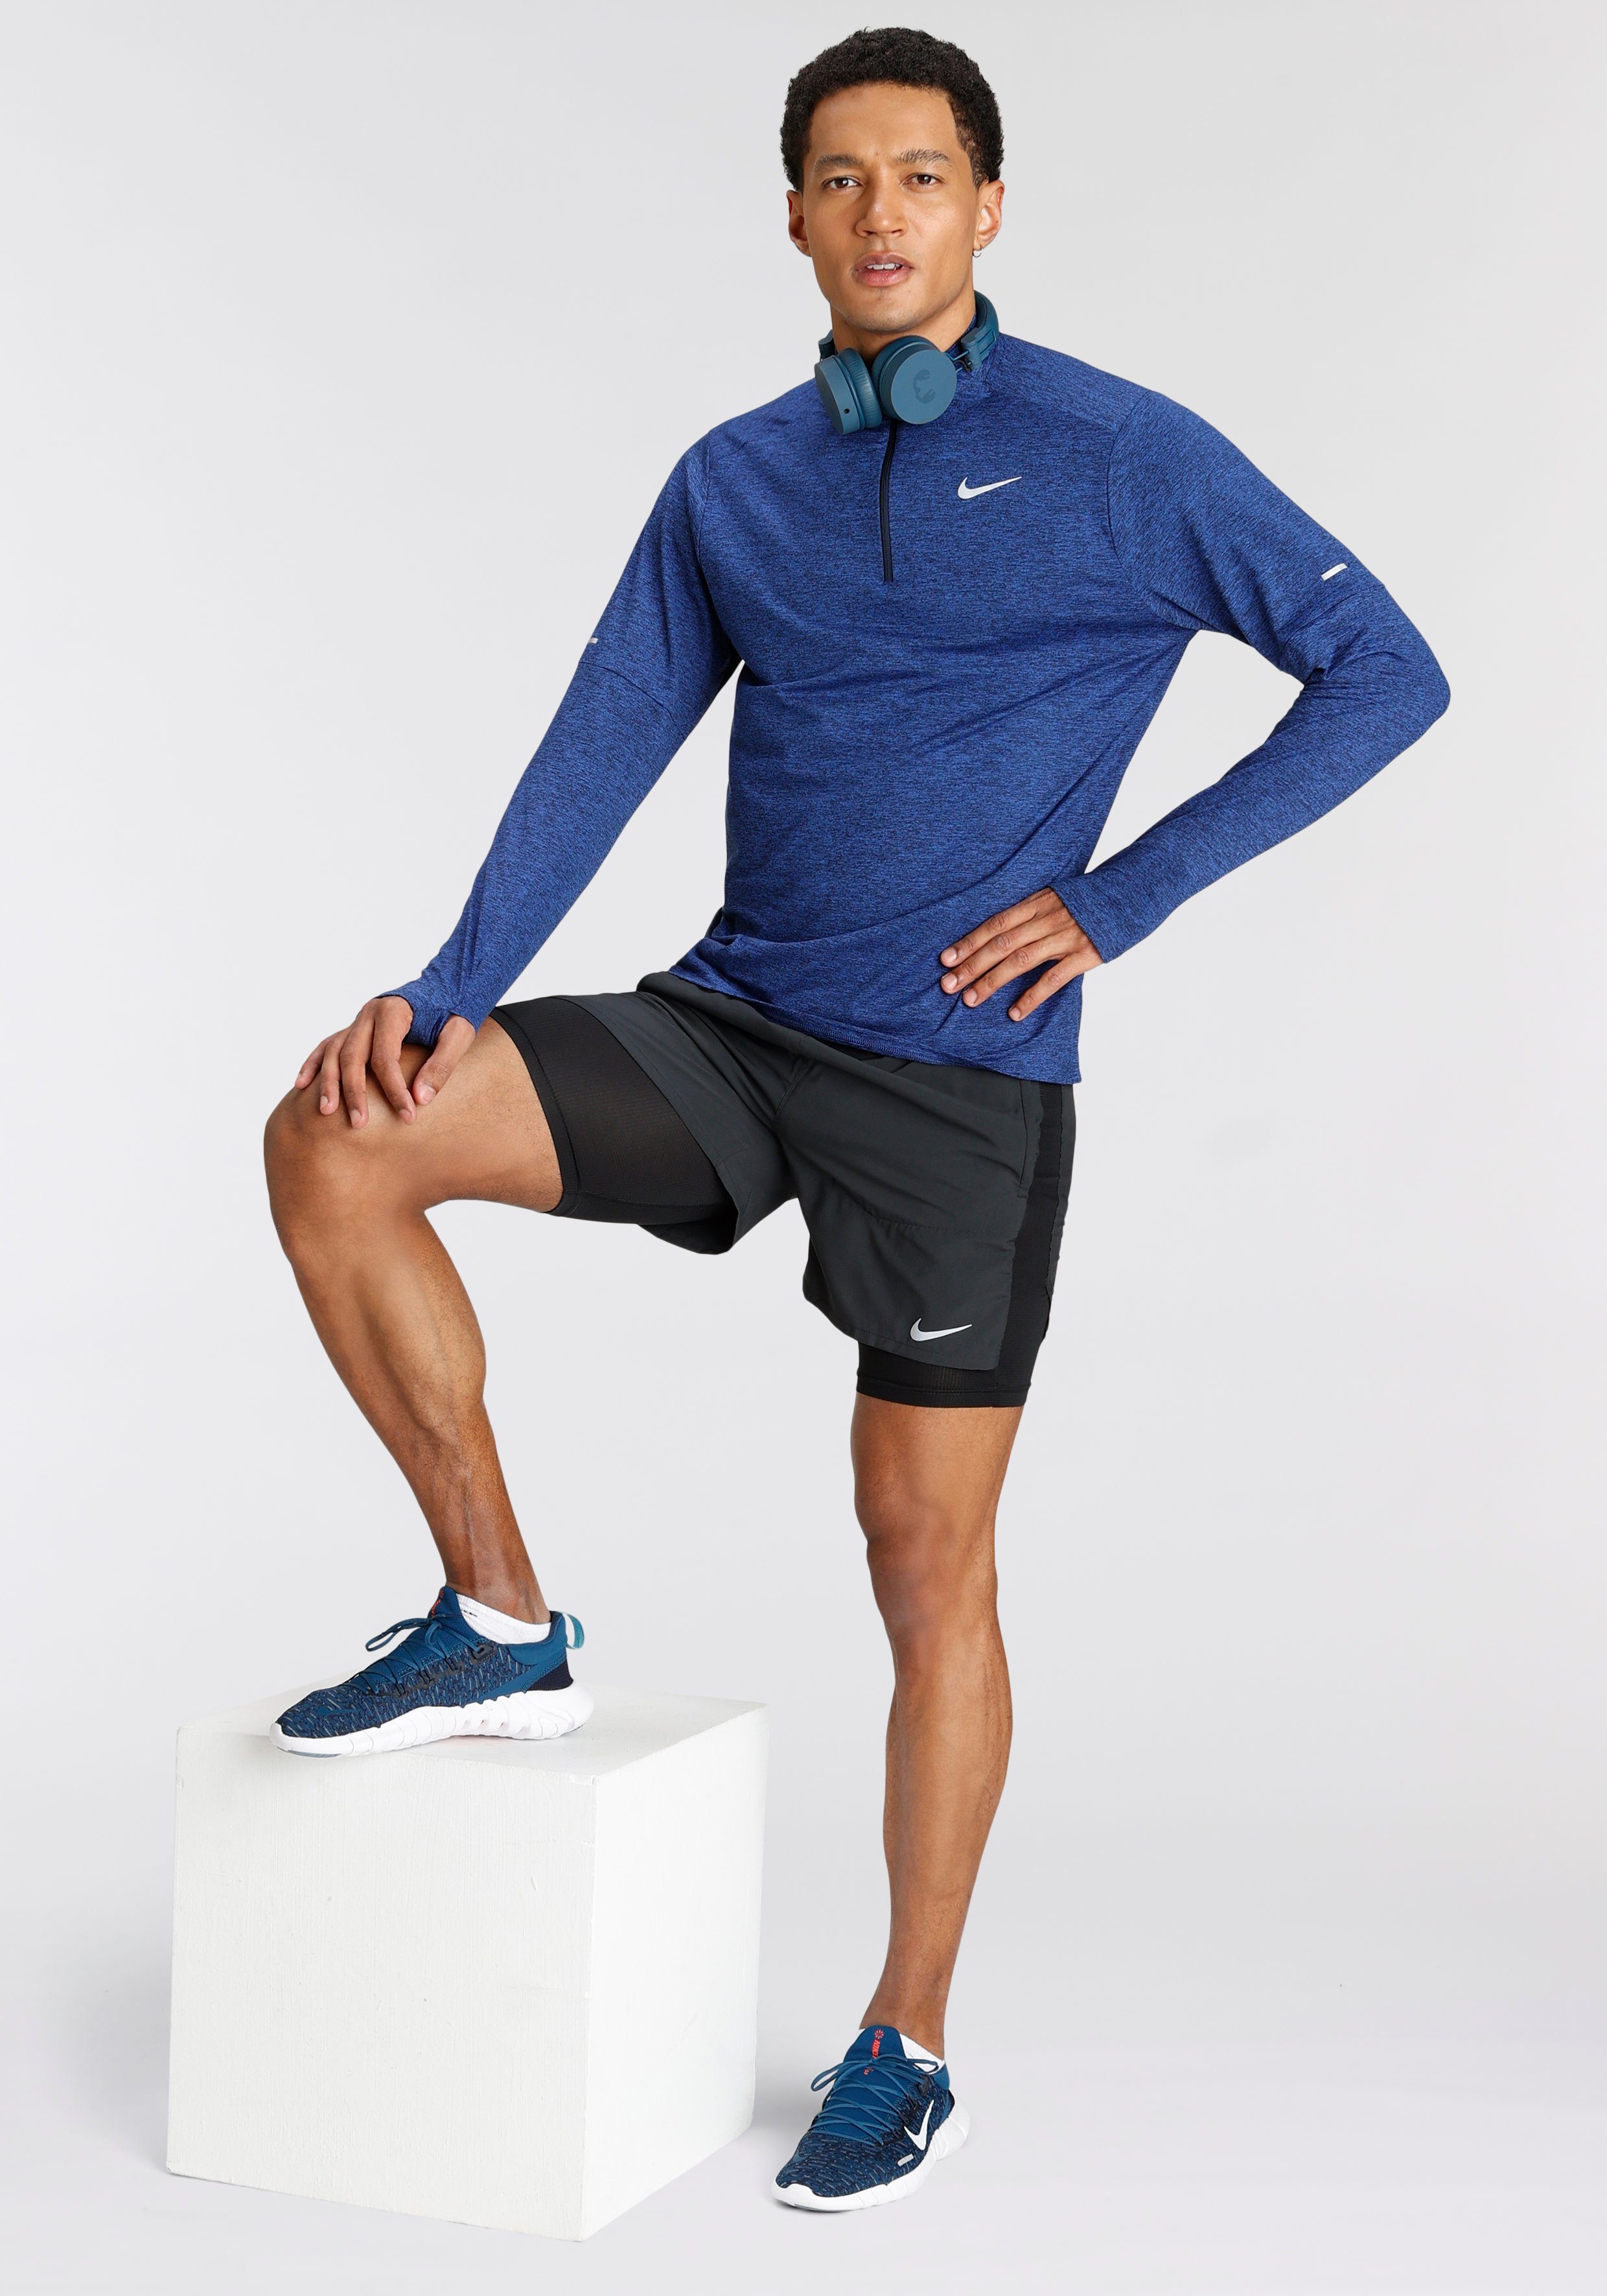 Nike Laufshirt Dri-FIT Running Men's Top Element OBSIDIAN/GAME 1/-Zip ROYAL/HTR/REFLECTIVE SILV